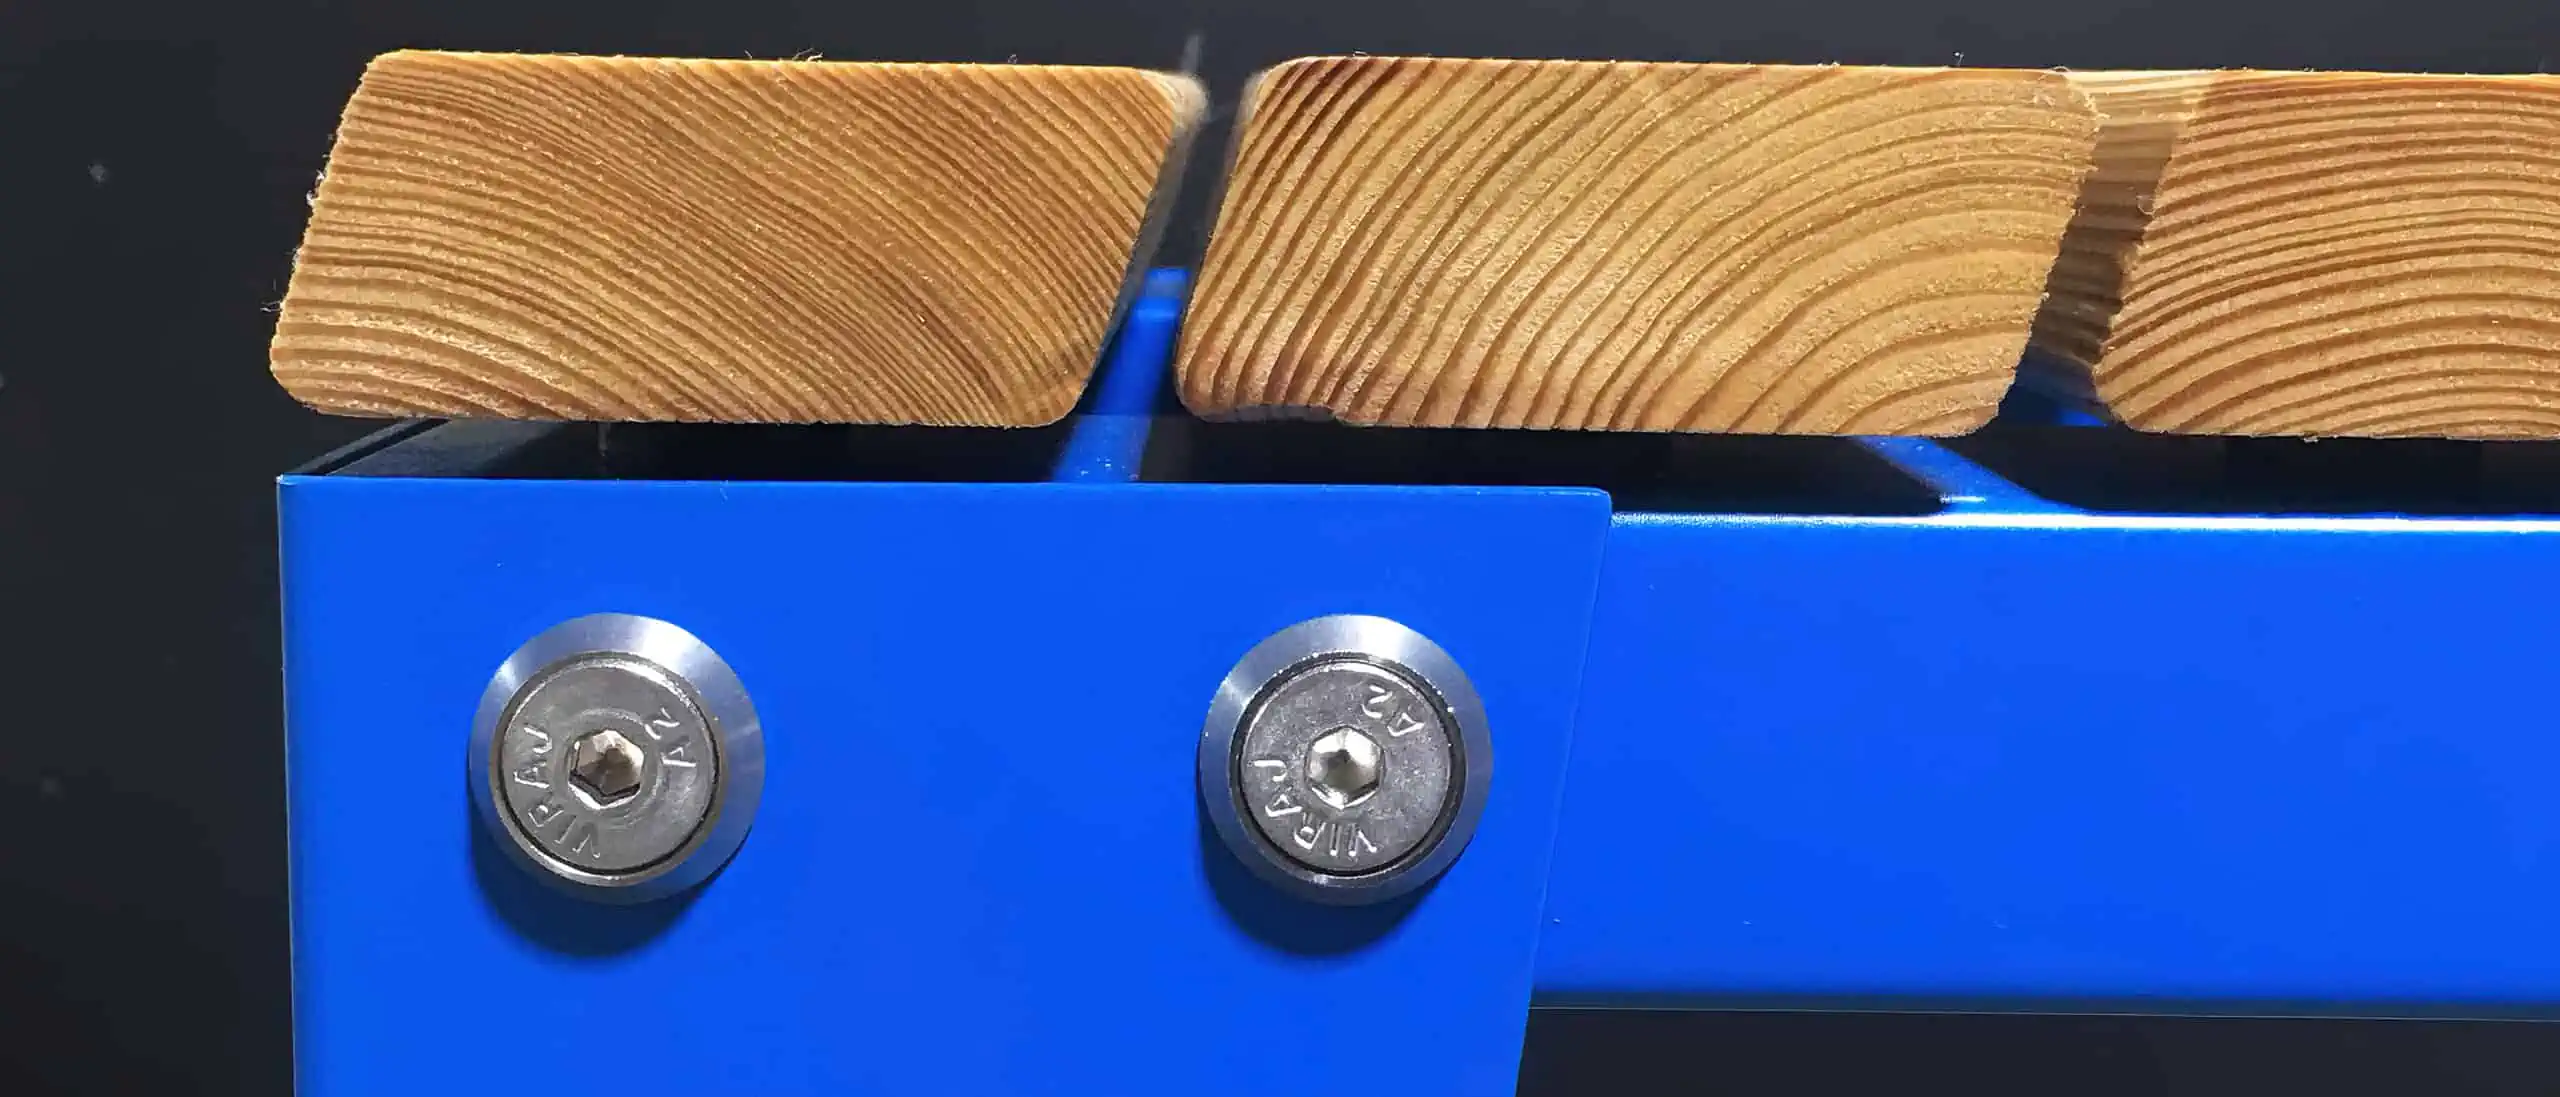 gartenbank-detail-holz-wetterfest-metall-bauen-modern-massiv-aluminium-alu-edelstahl-schraube-massivholz-cool-design-ohne-lehne-sibirische-laerche-lattung-blau-stahlzart